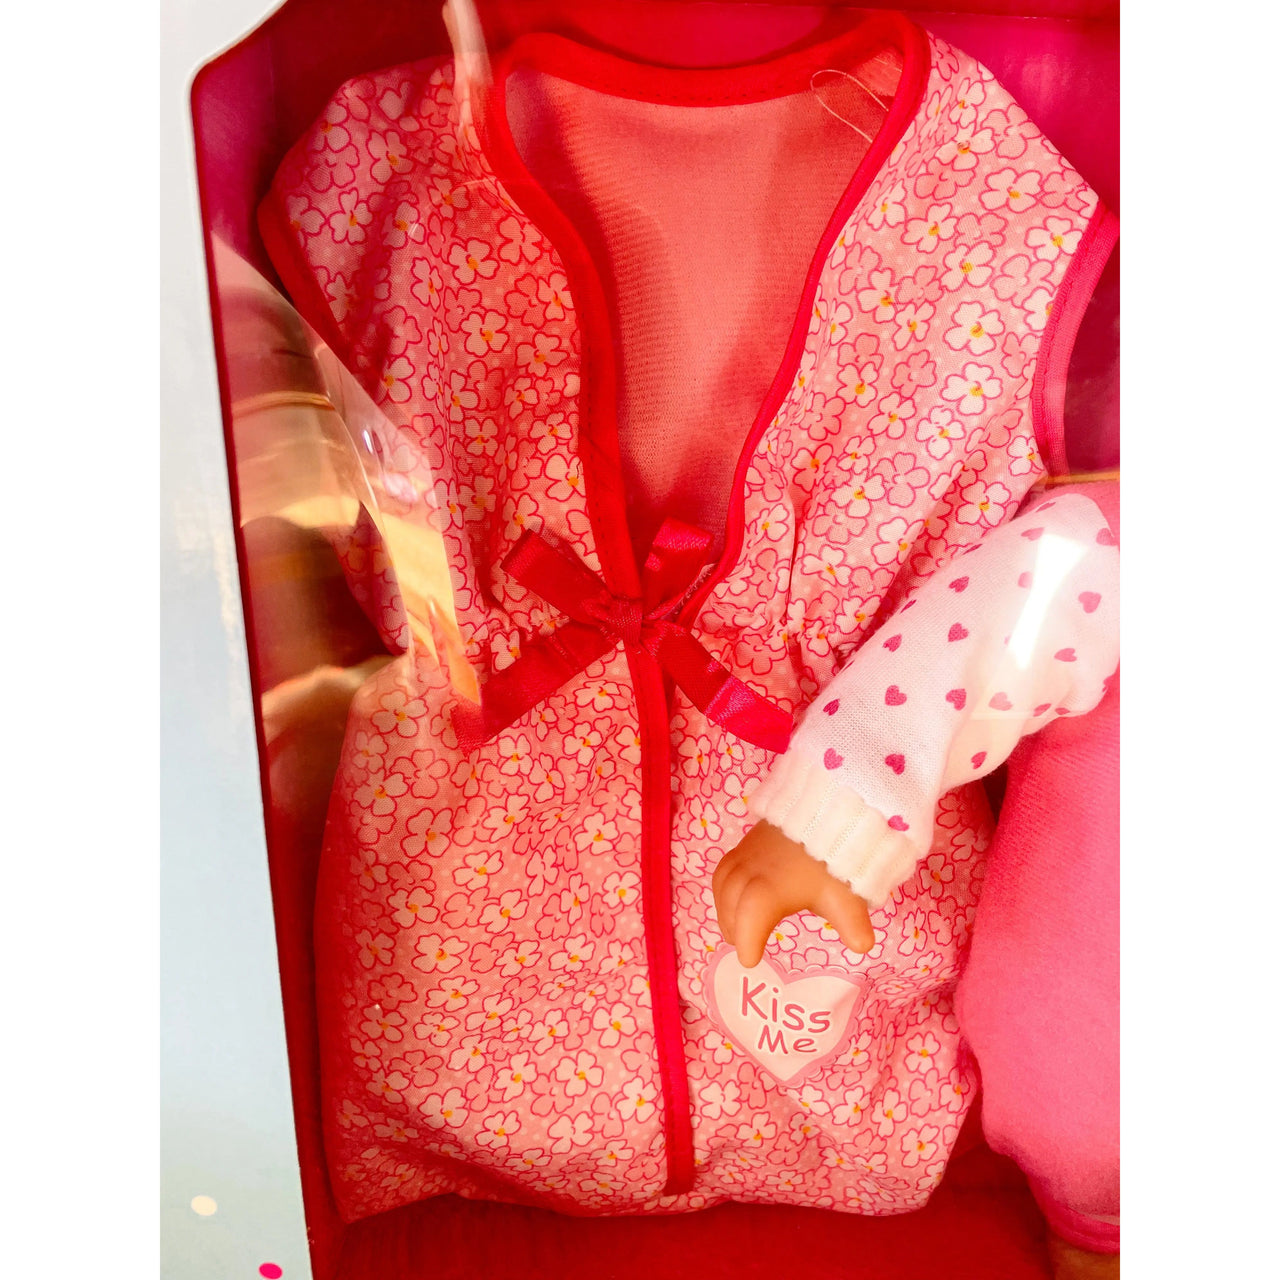 13" Vinyl Baby Doll With Sleep Bag & Accessories Unicorn & Punkboi